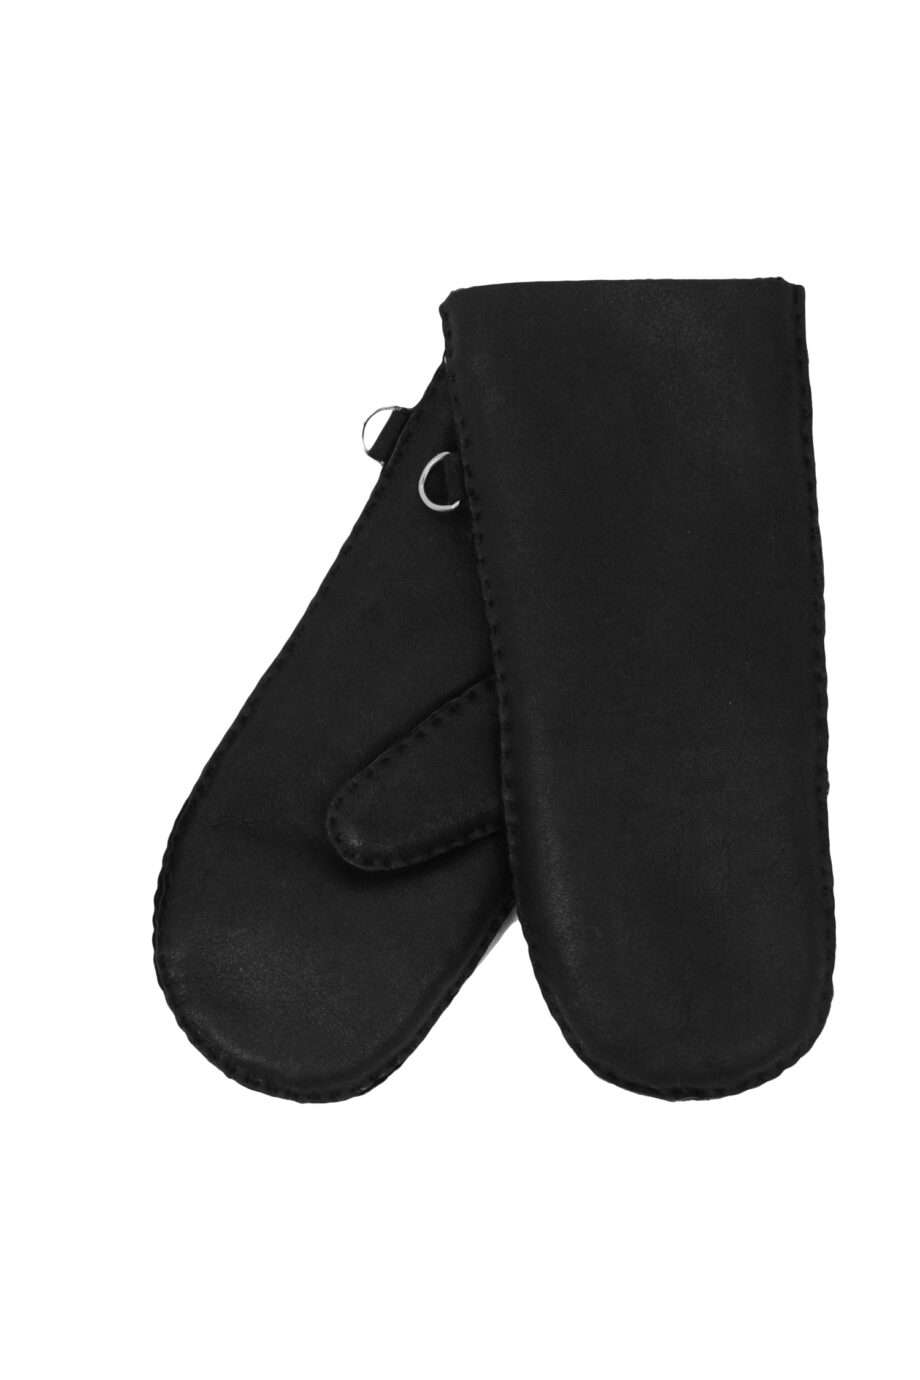 urban black nappa sheepfur mittens (women) medium